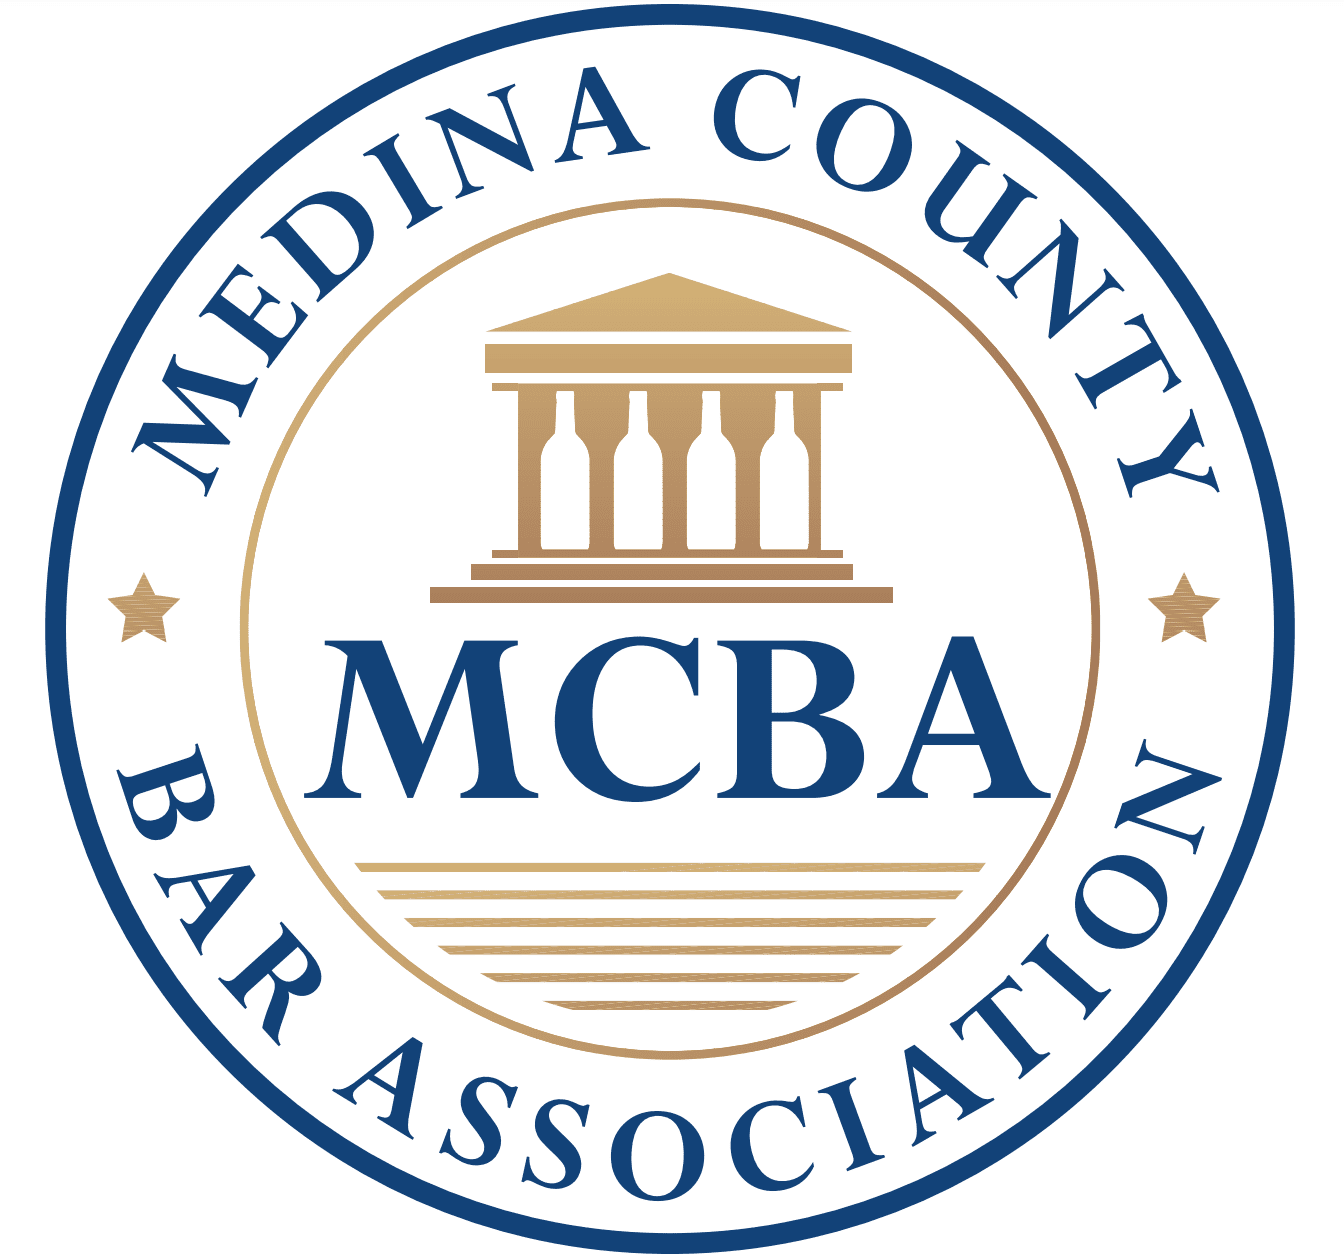 A seal that says medina county bar association